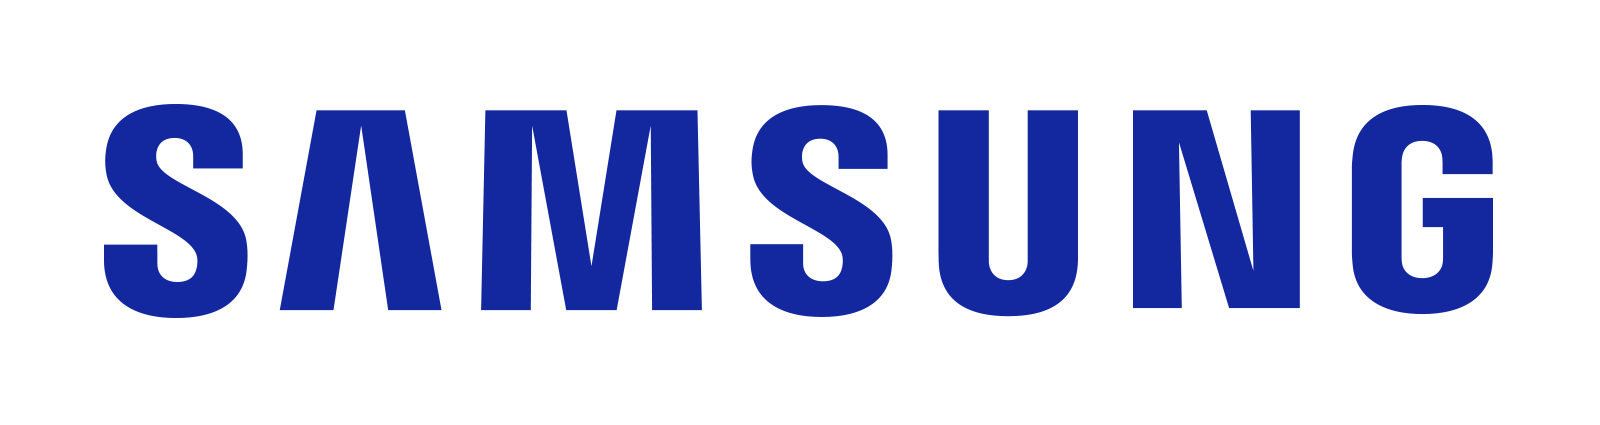 Marketing Support to Samsung!